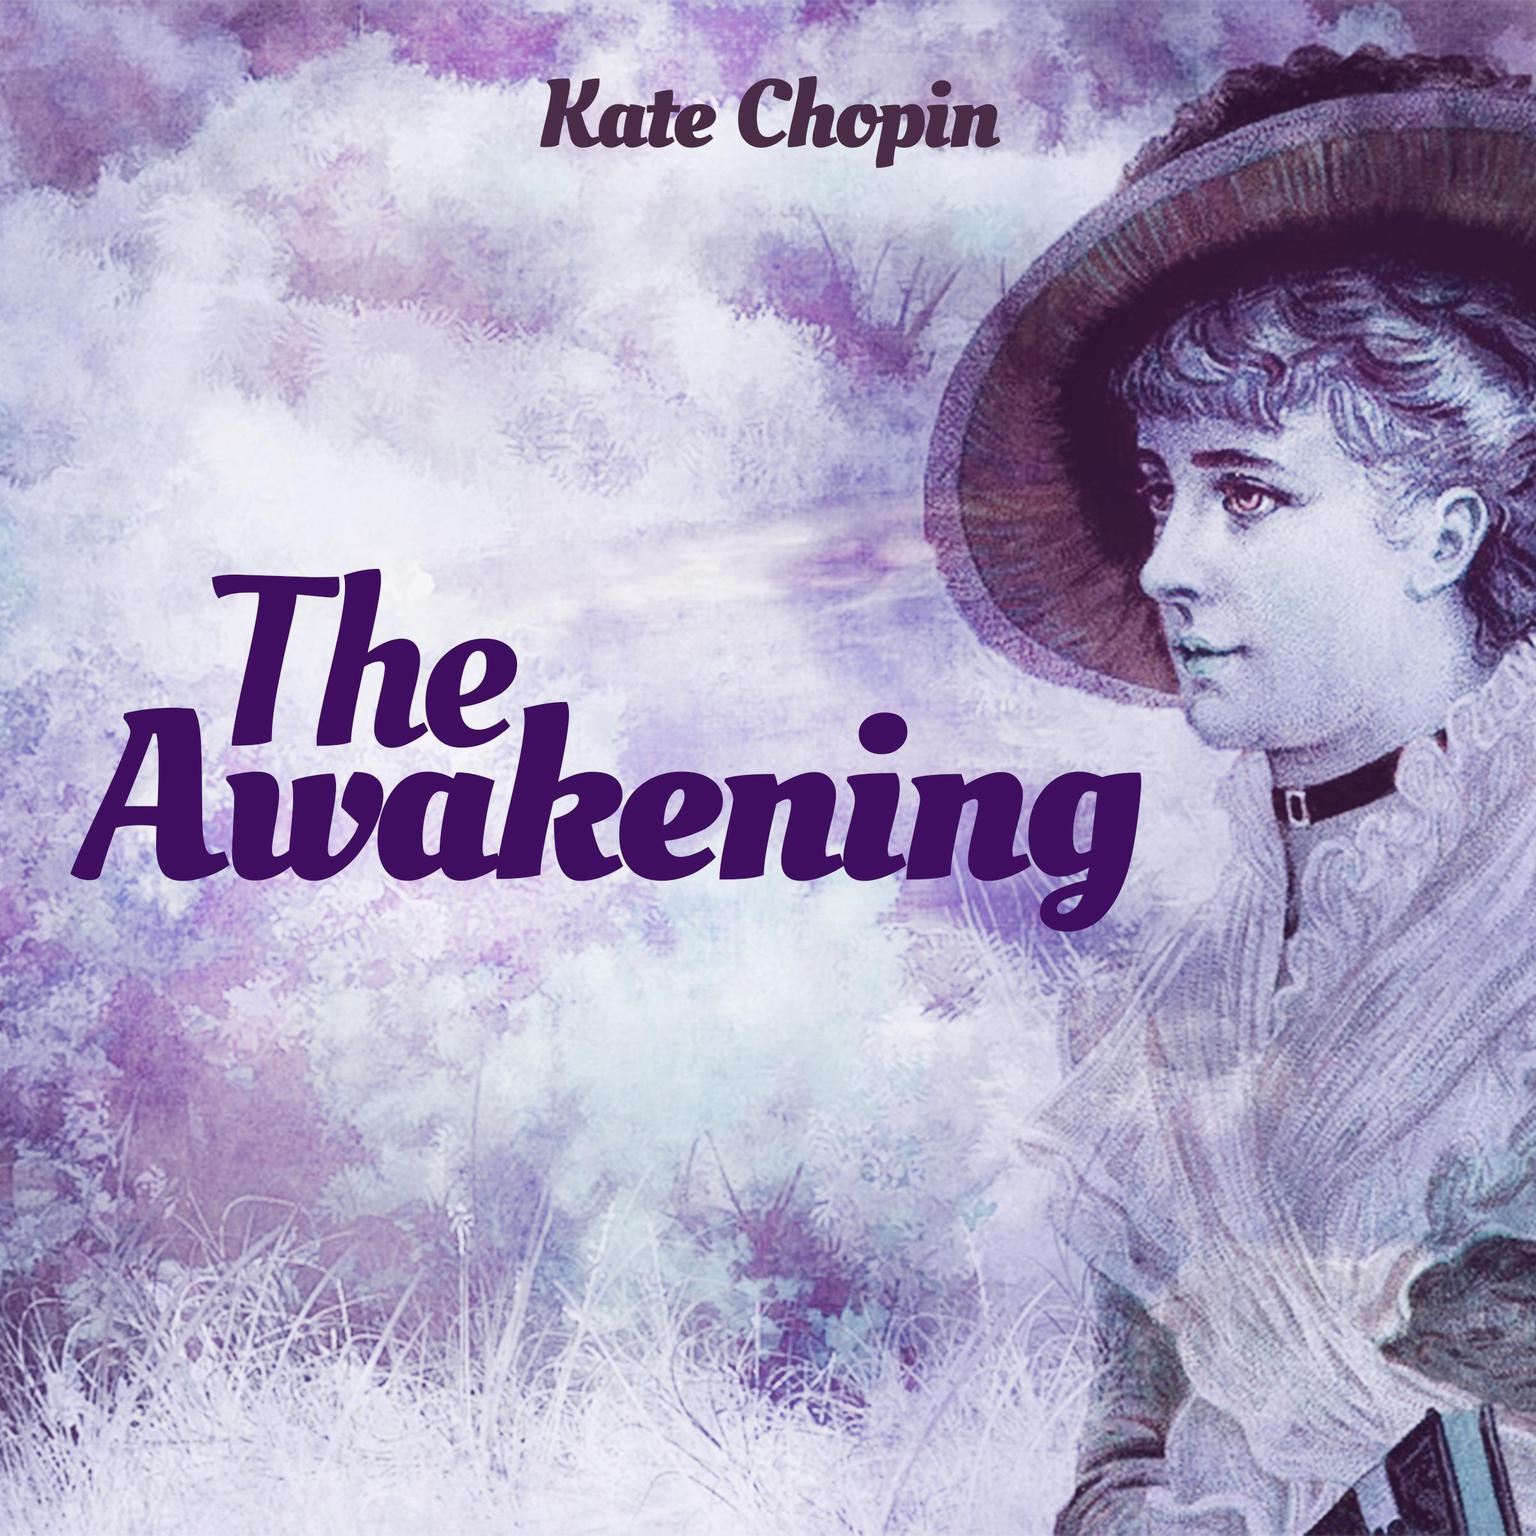 The Awakening Audiobook, by Kate Chopin